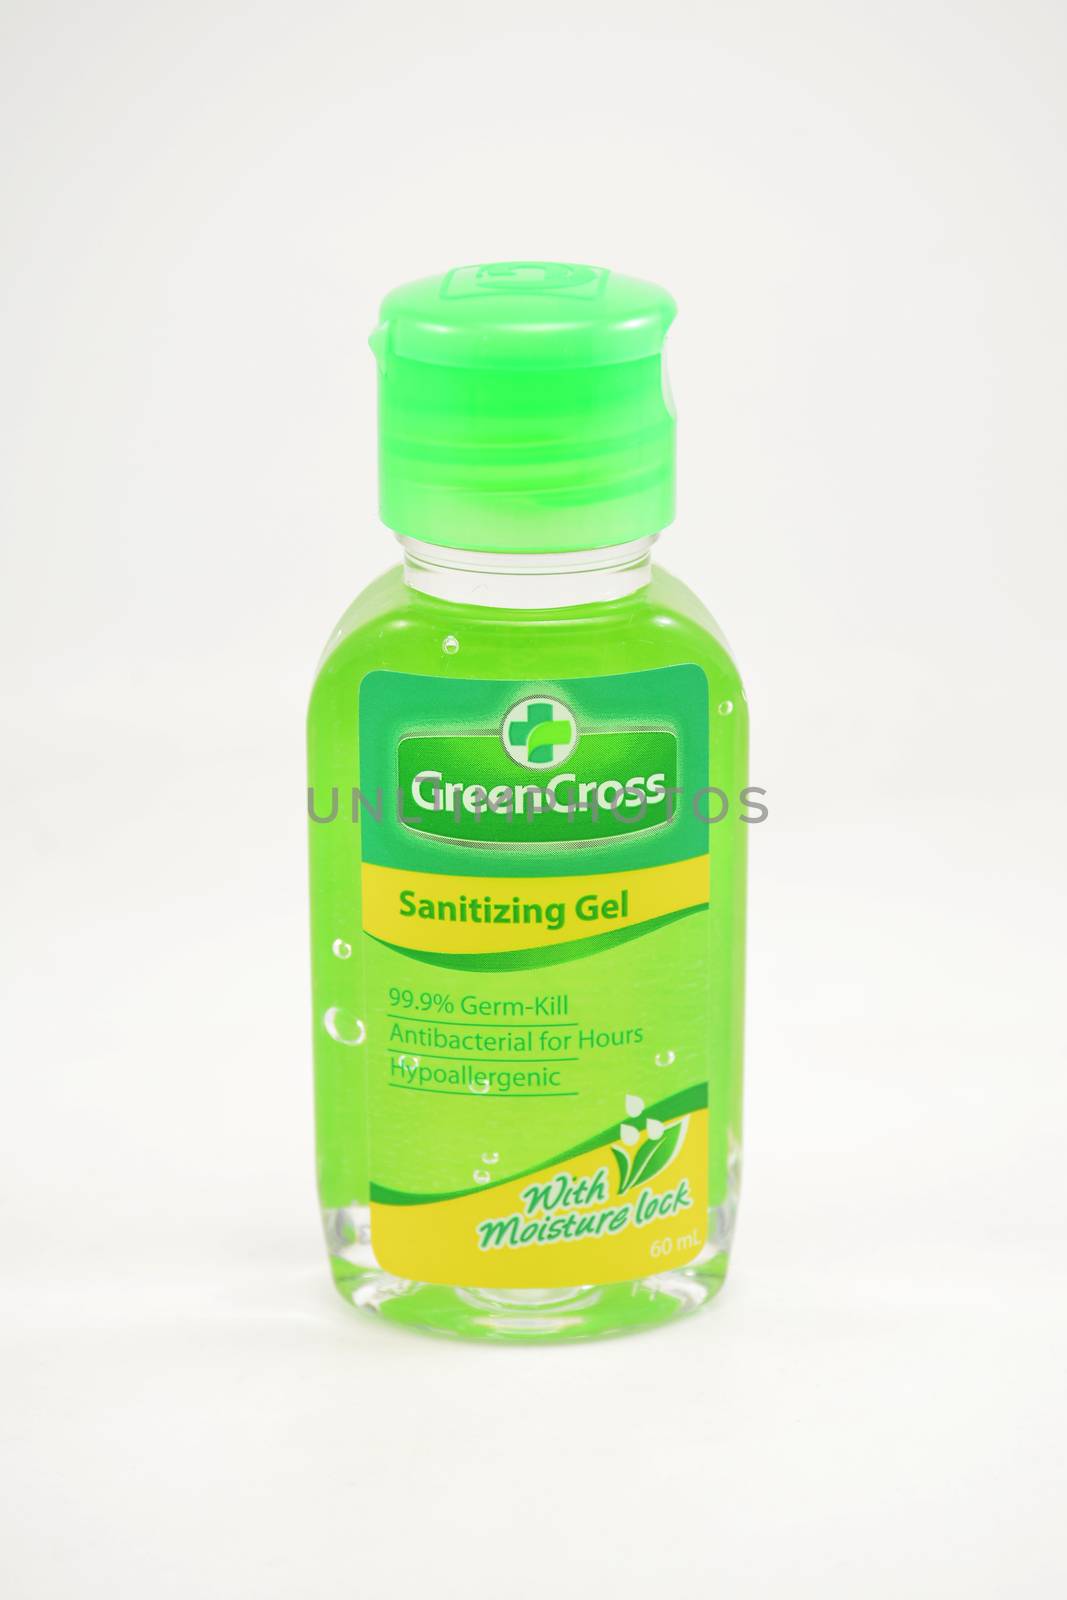 MANILA, PH - JUNE 26 - Green cross sanitizing gel on June 26, 2020 in Manila, Philippines.